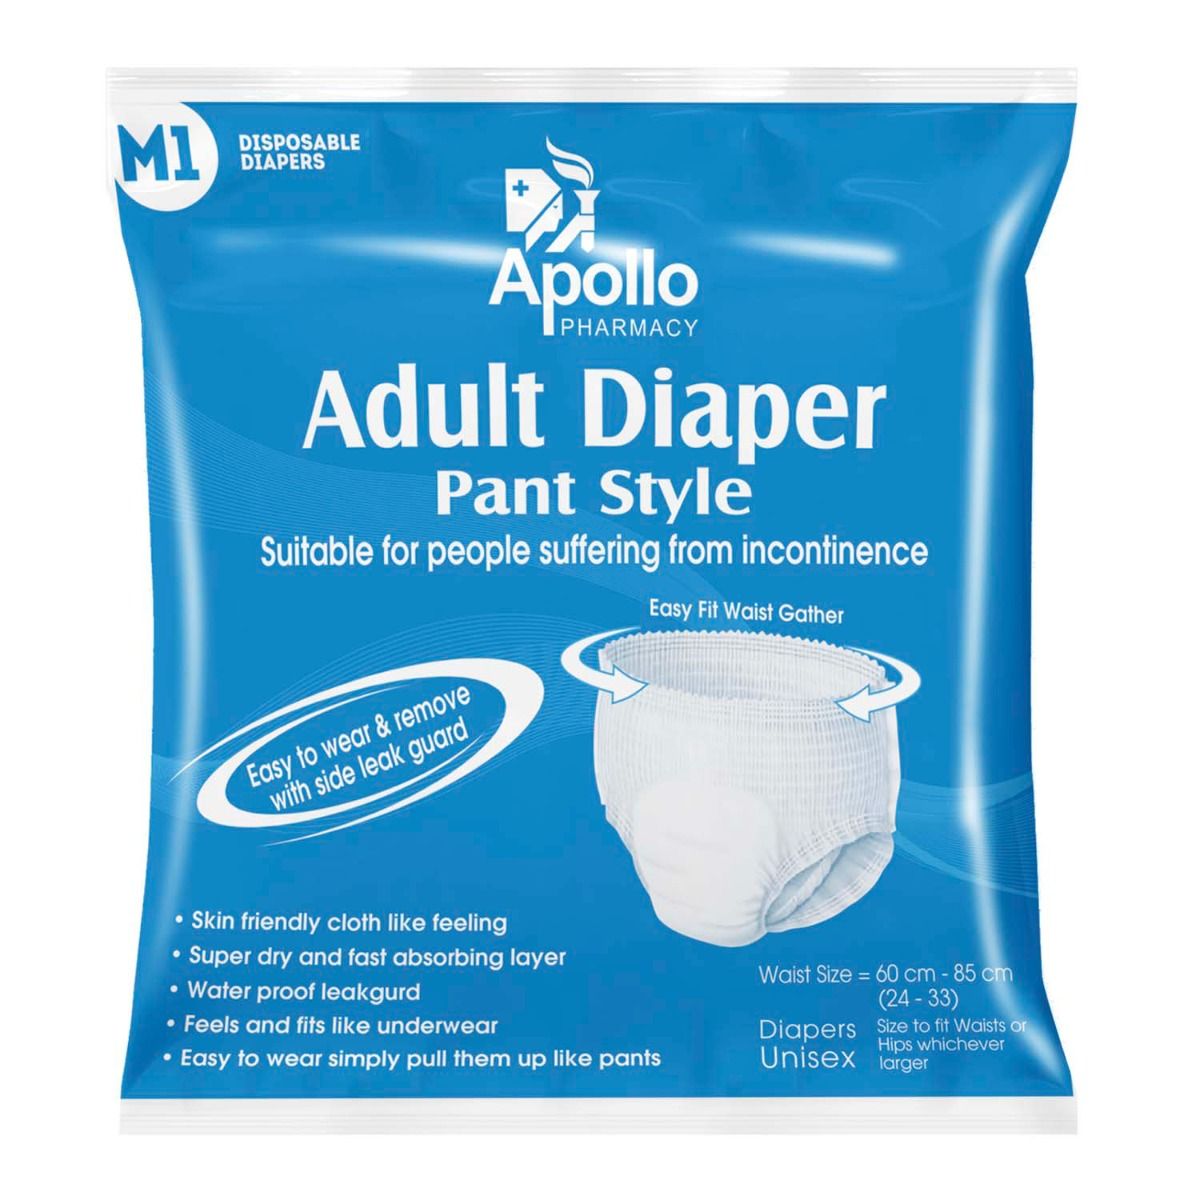 Buy CIR Adult Diaper Pants Unisex Online